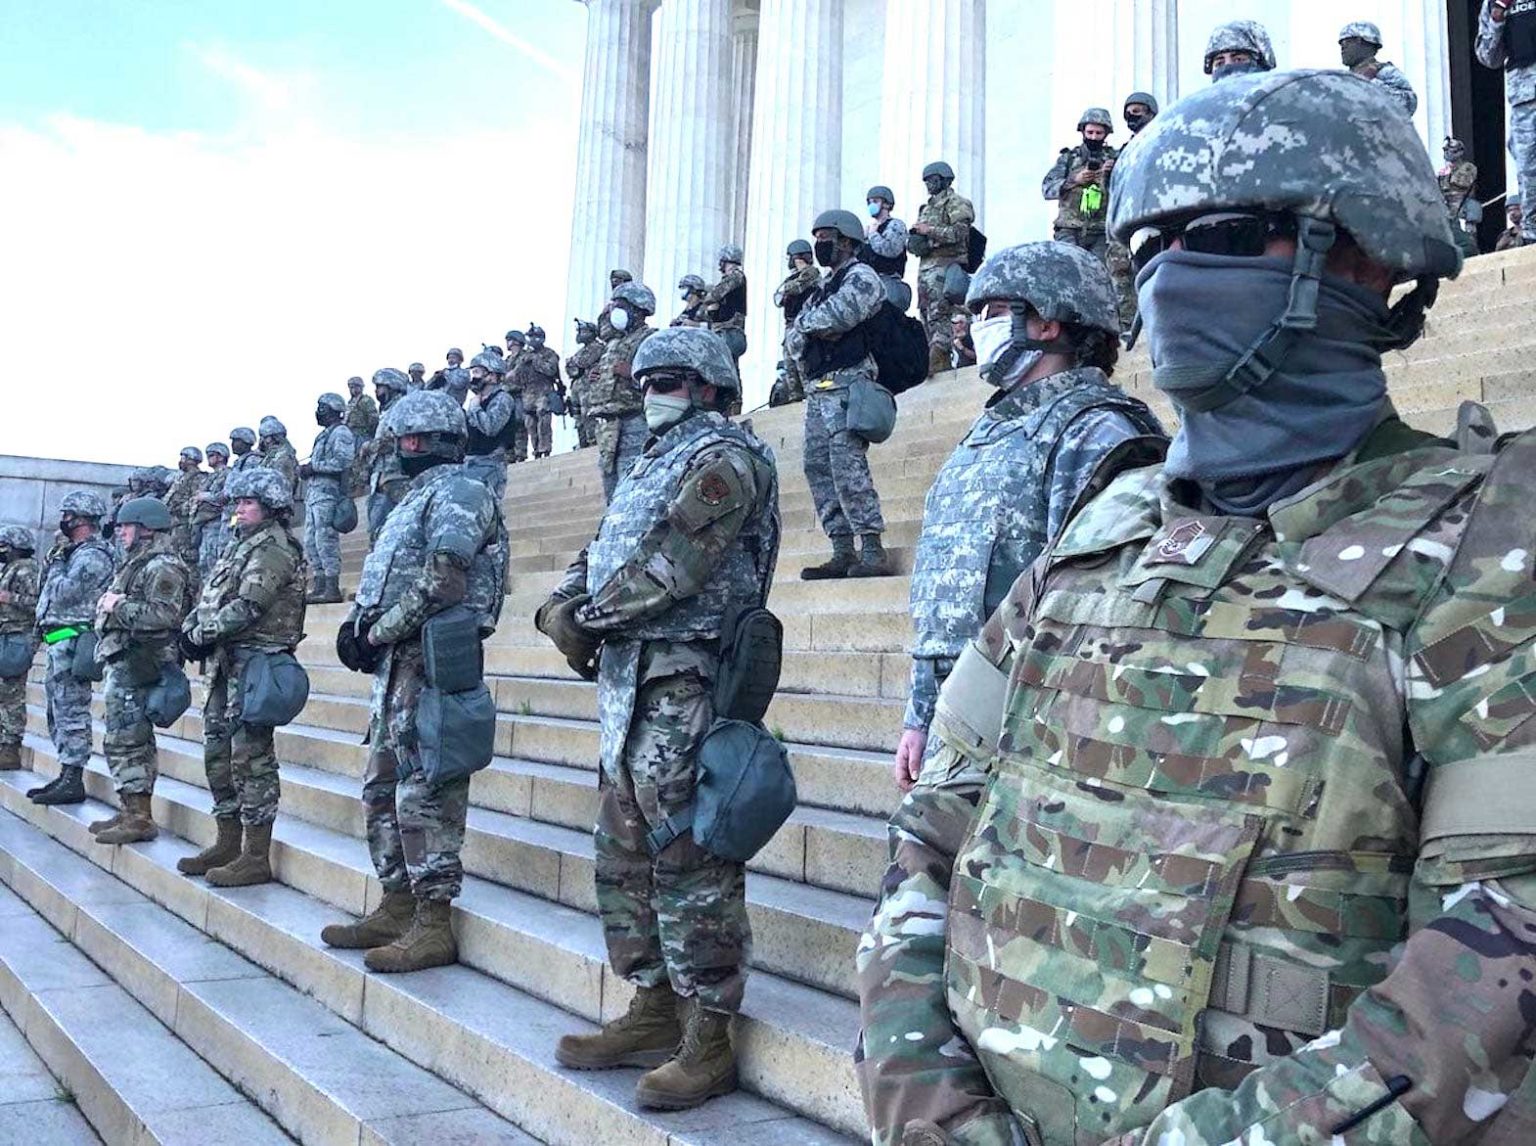 National Guardsmen on the steps of the Lincoln Memorial in Washington, D.C., on June 2, 2020. (Twitter/Martha Raddatz)